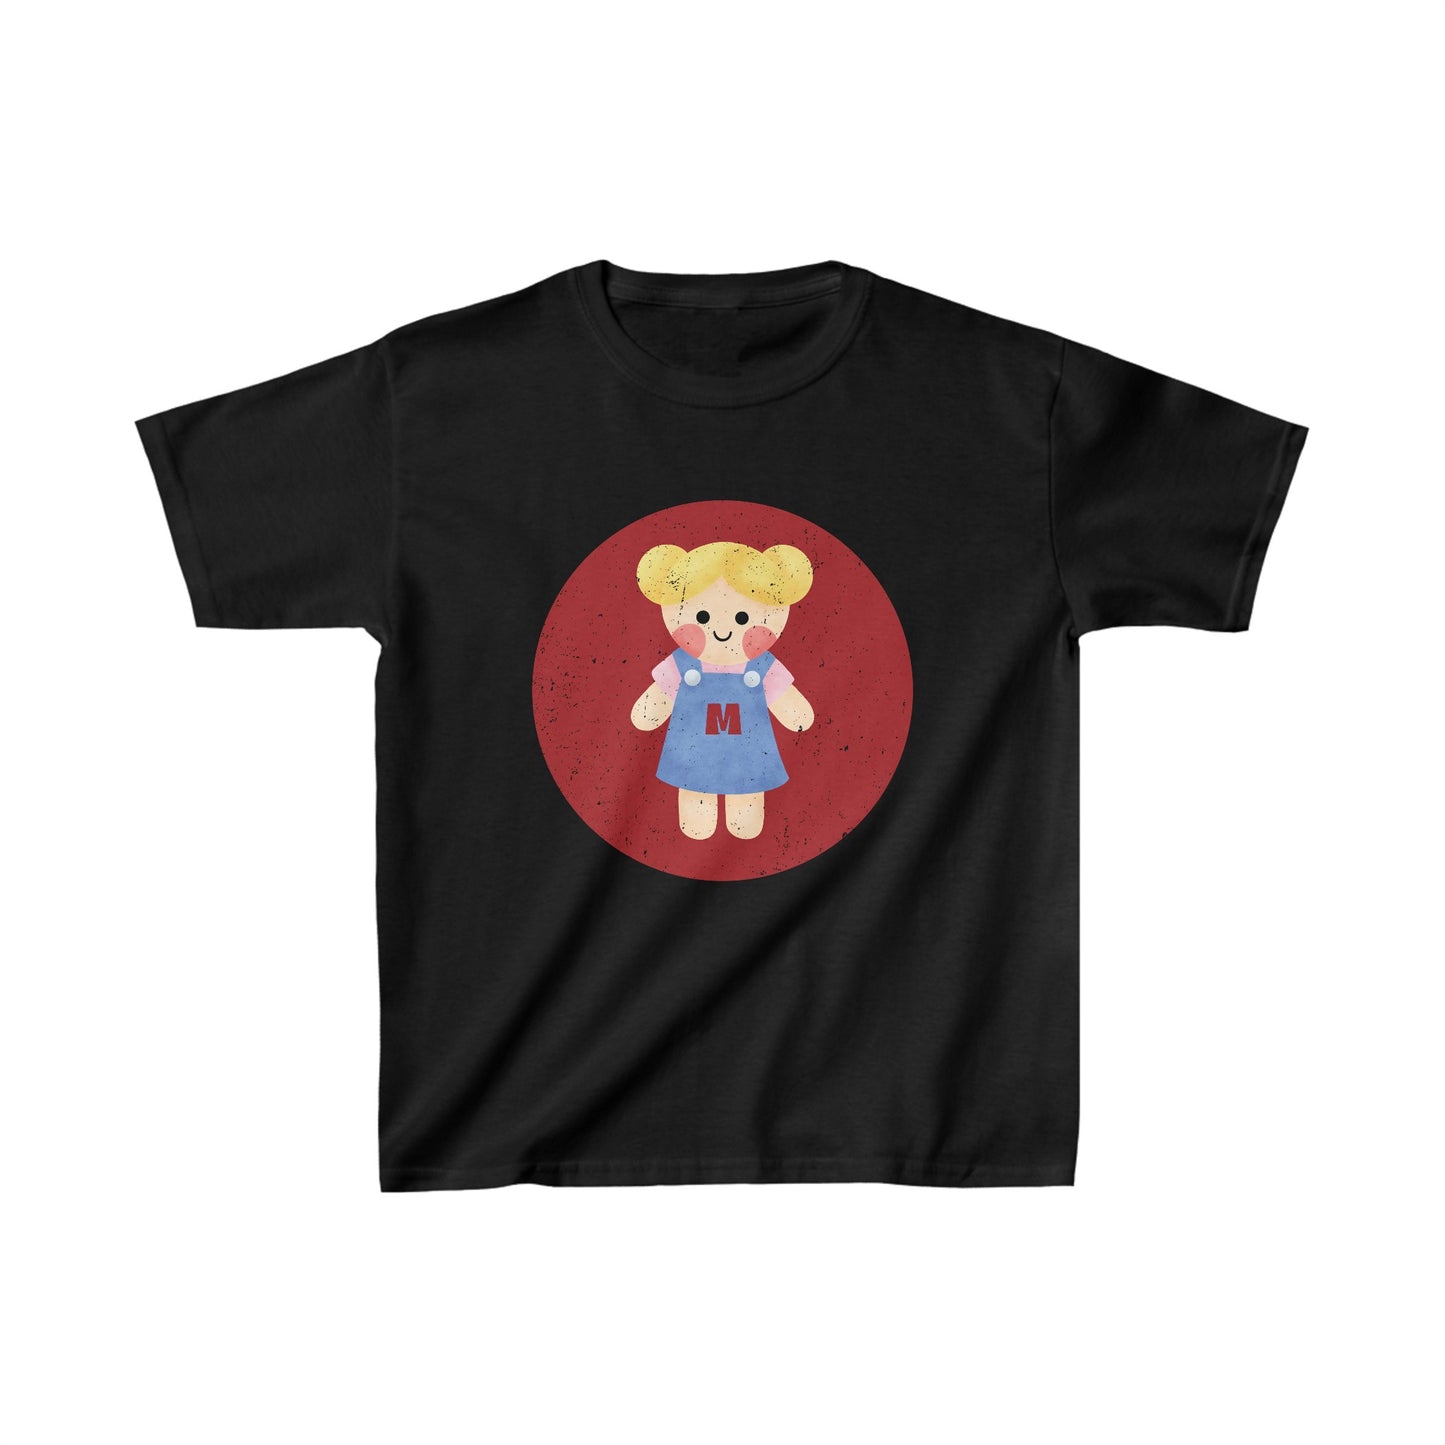 Kids' rag doll T-shirt